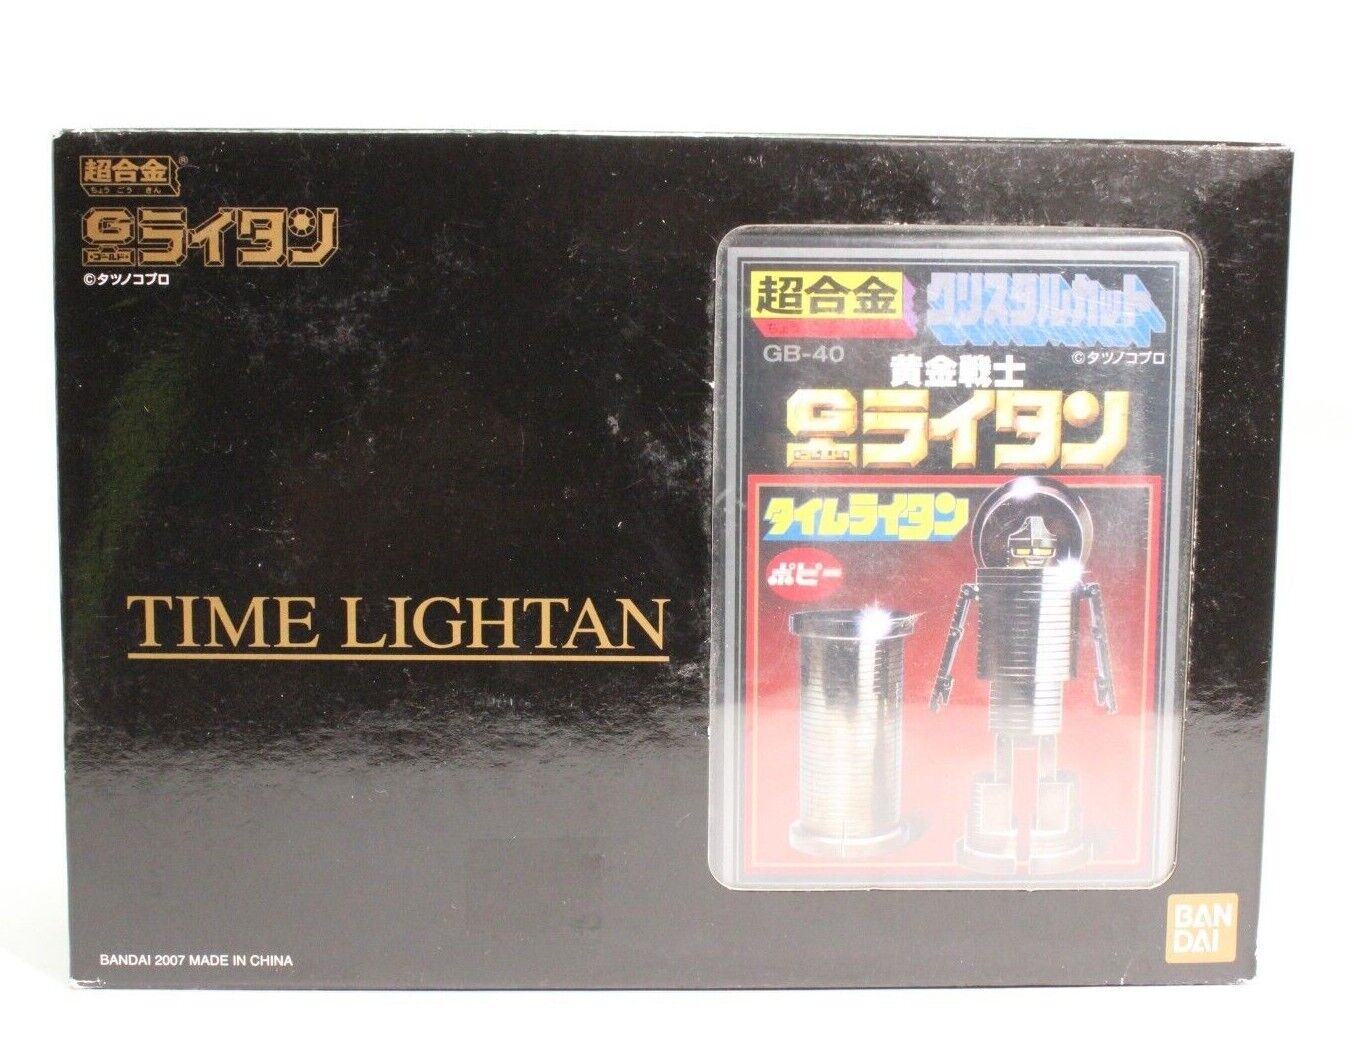 BANDAI Time Lightan Silver Chogokin GB-40 Re-Issue Golden Warrior Gold Lightan